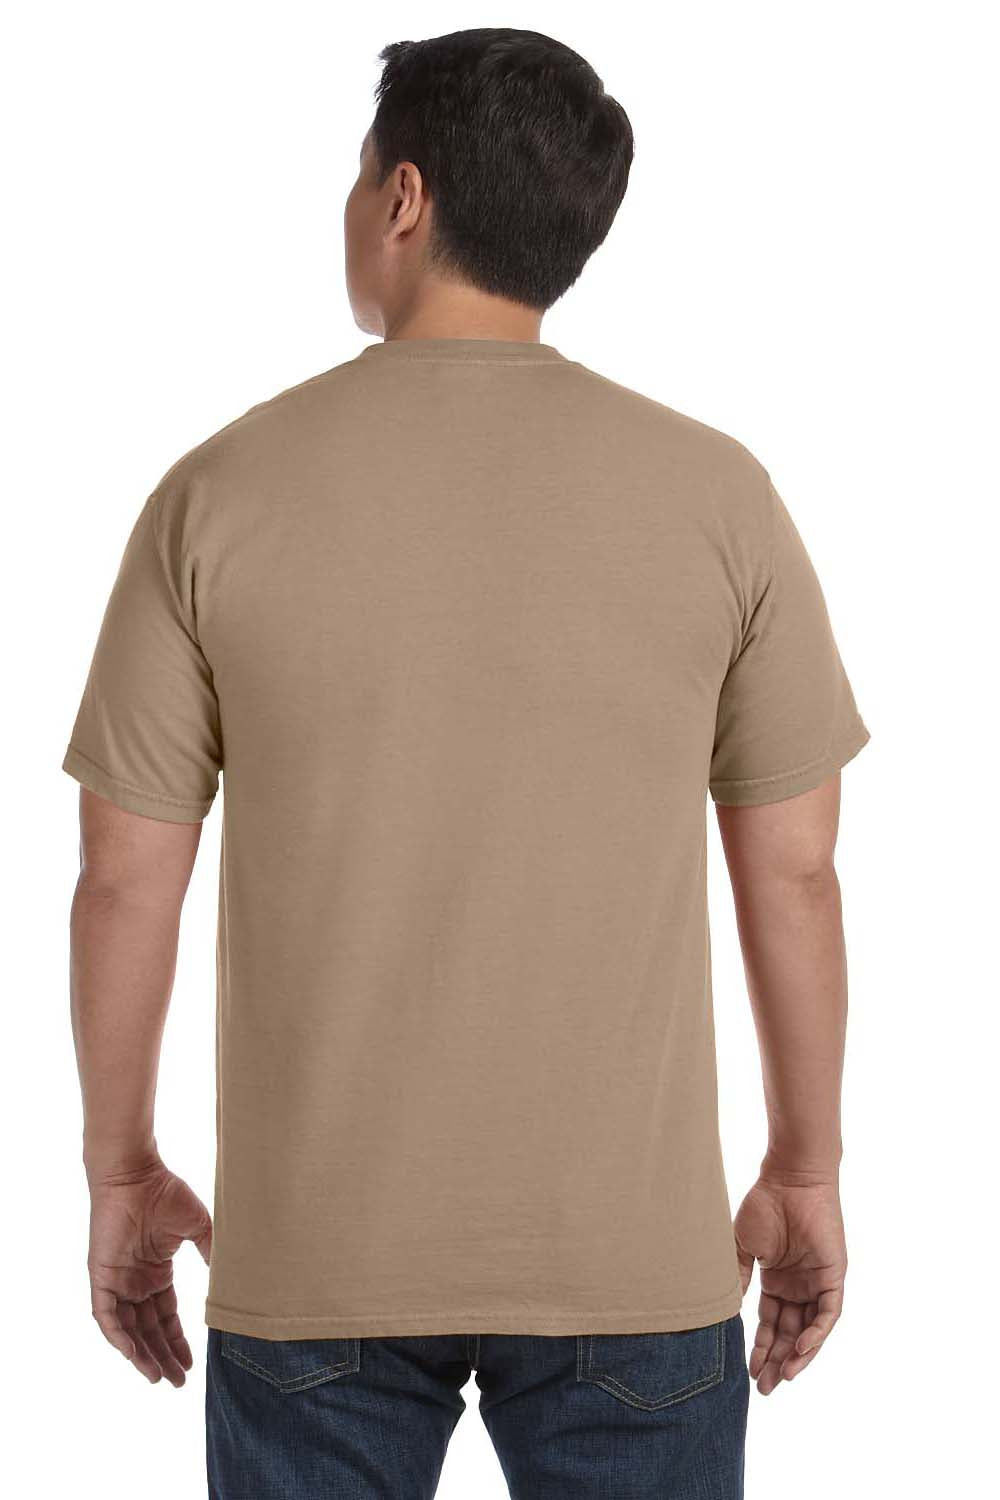 Comfort Colors C1717 Mens Short Sleeve Crewneck T-Shirt Khaki Brown Back